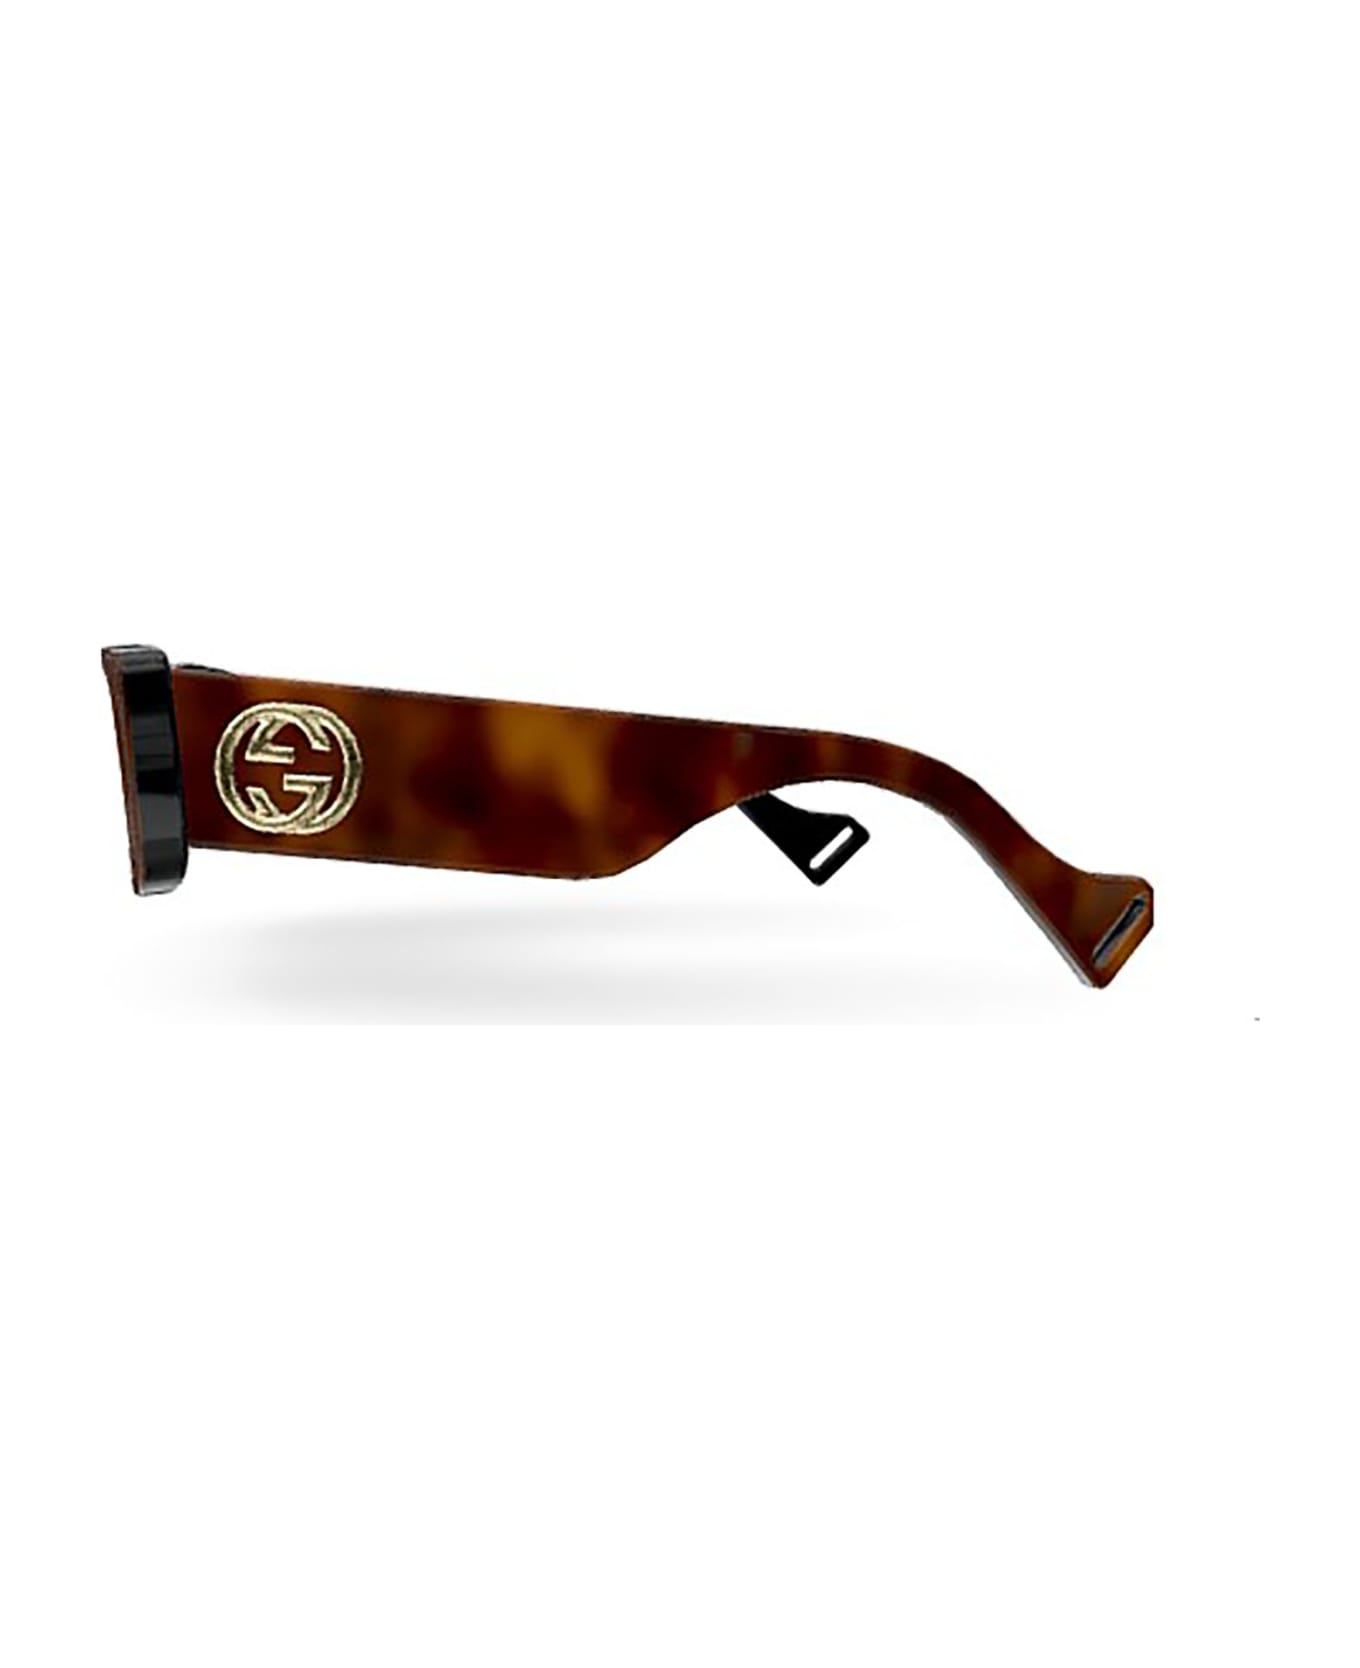 Gucci Eyewear Gg0516s Sunglasses - 015 havana havana red サングラス